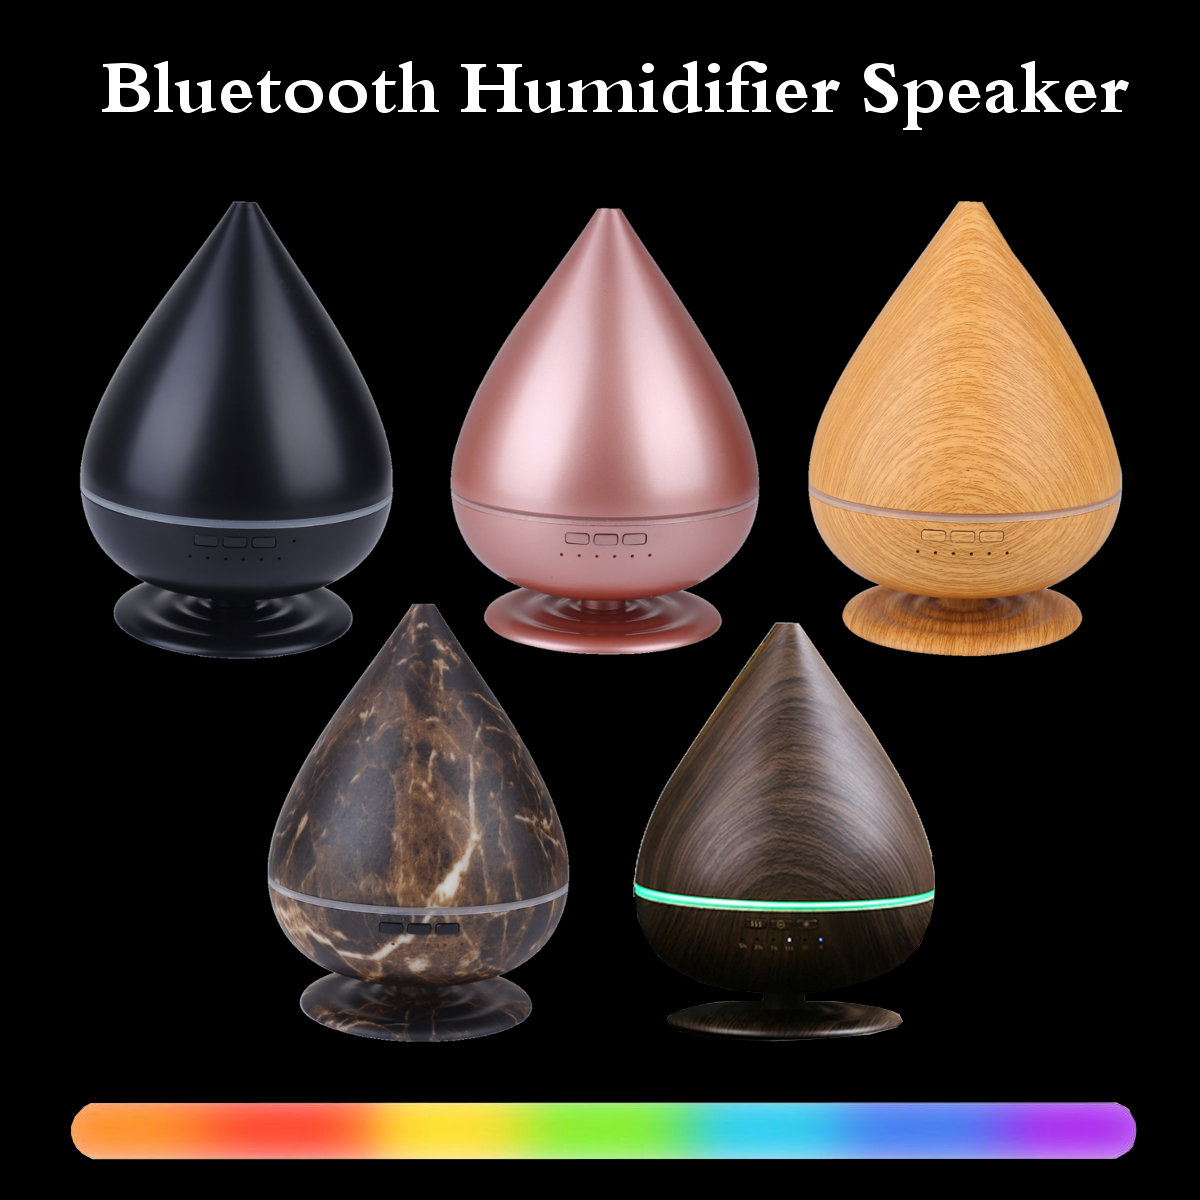 Wireless-bluetooth-Speaker-Ultrasonic-Aroma-Humidfier-Air-Cleaner-LED-bluetooth-Humidfier-Speaker-1350924-6